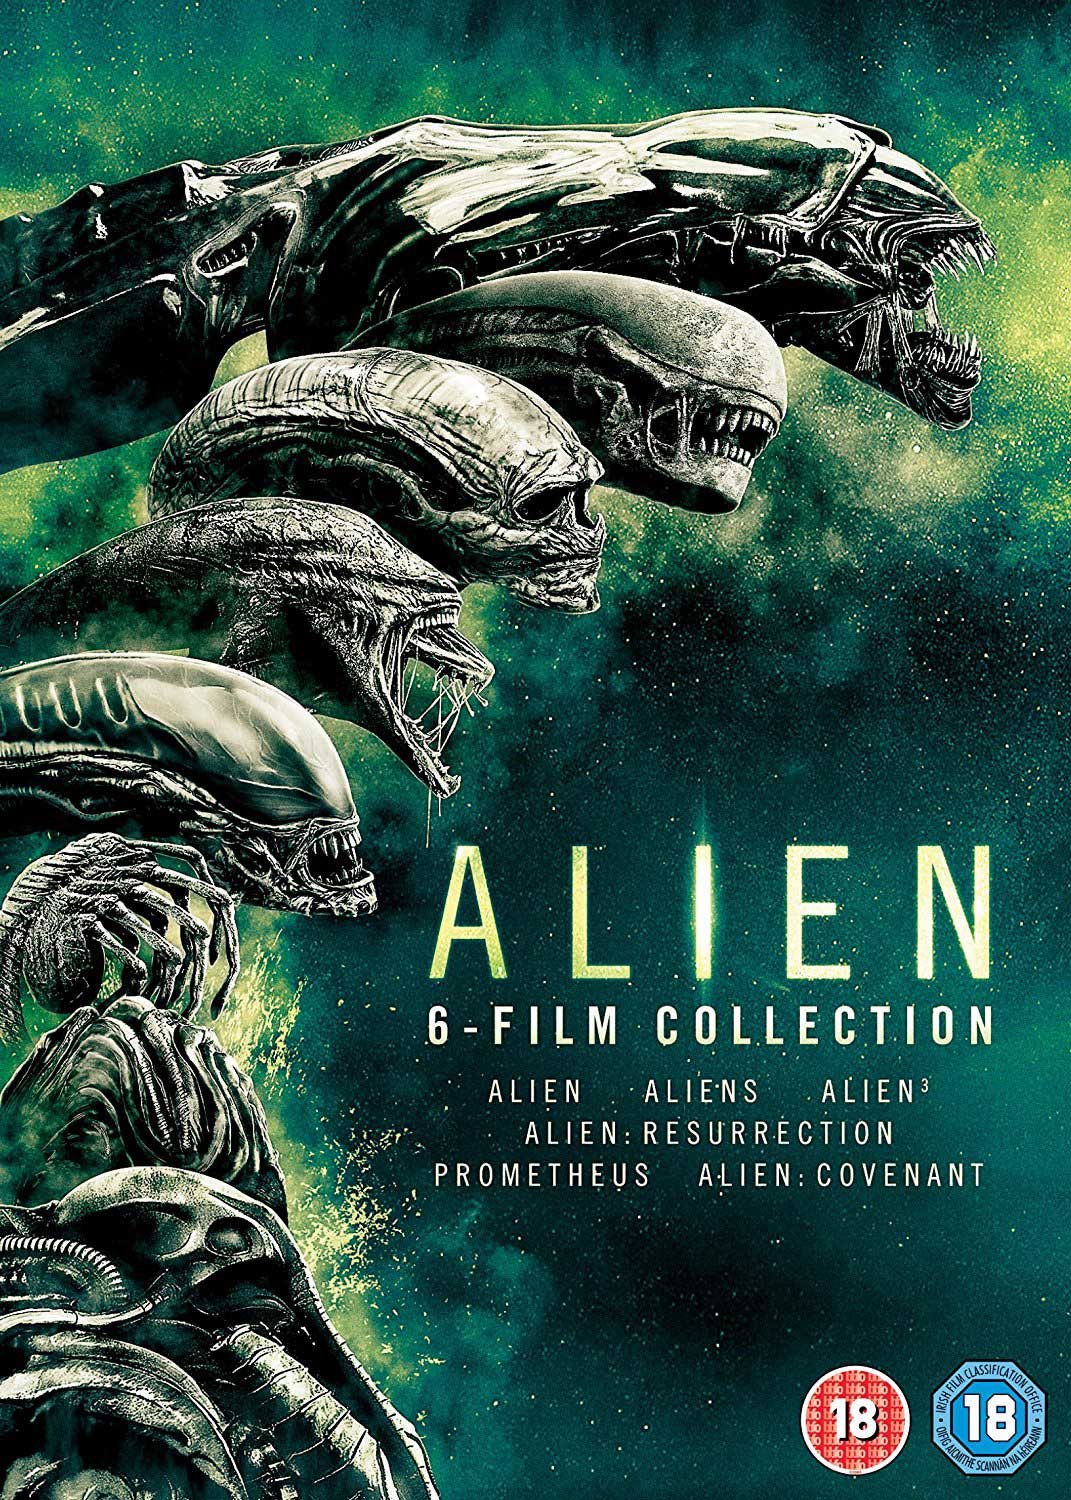 Alien 3 DVD & Blu-Ray Sets - AvPGalaxy